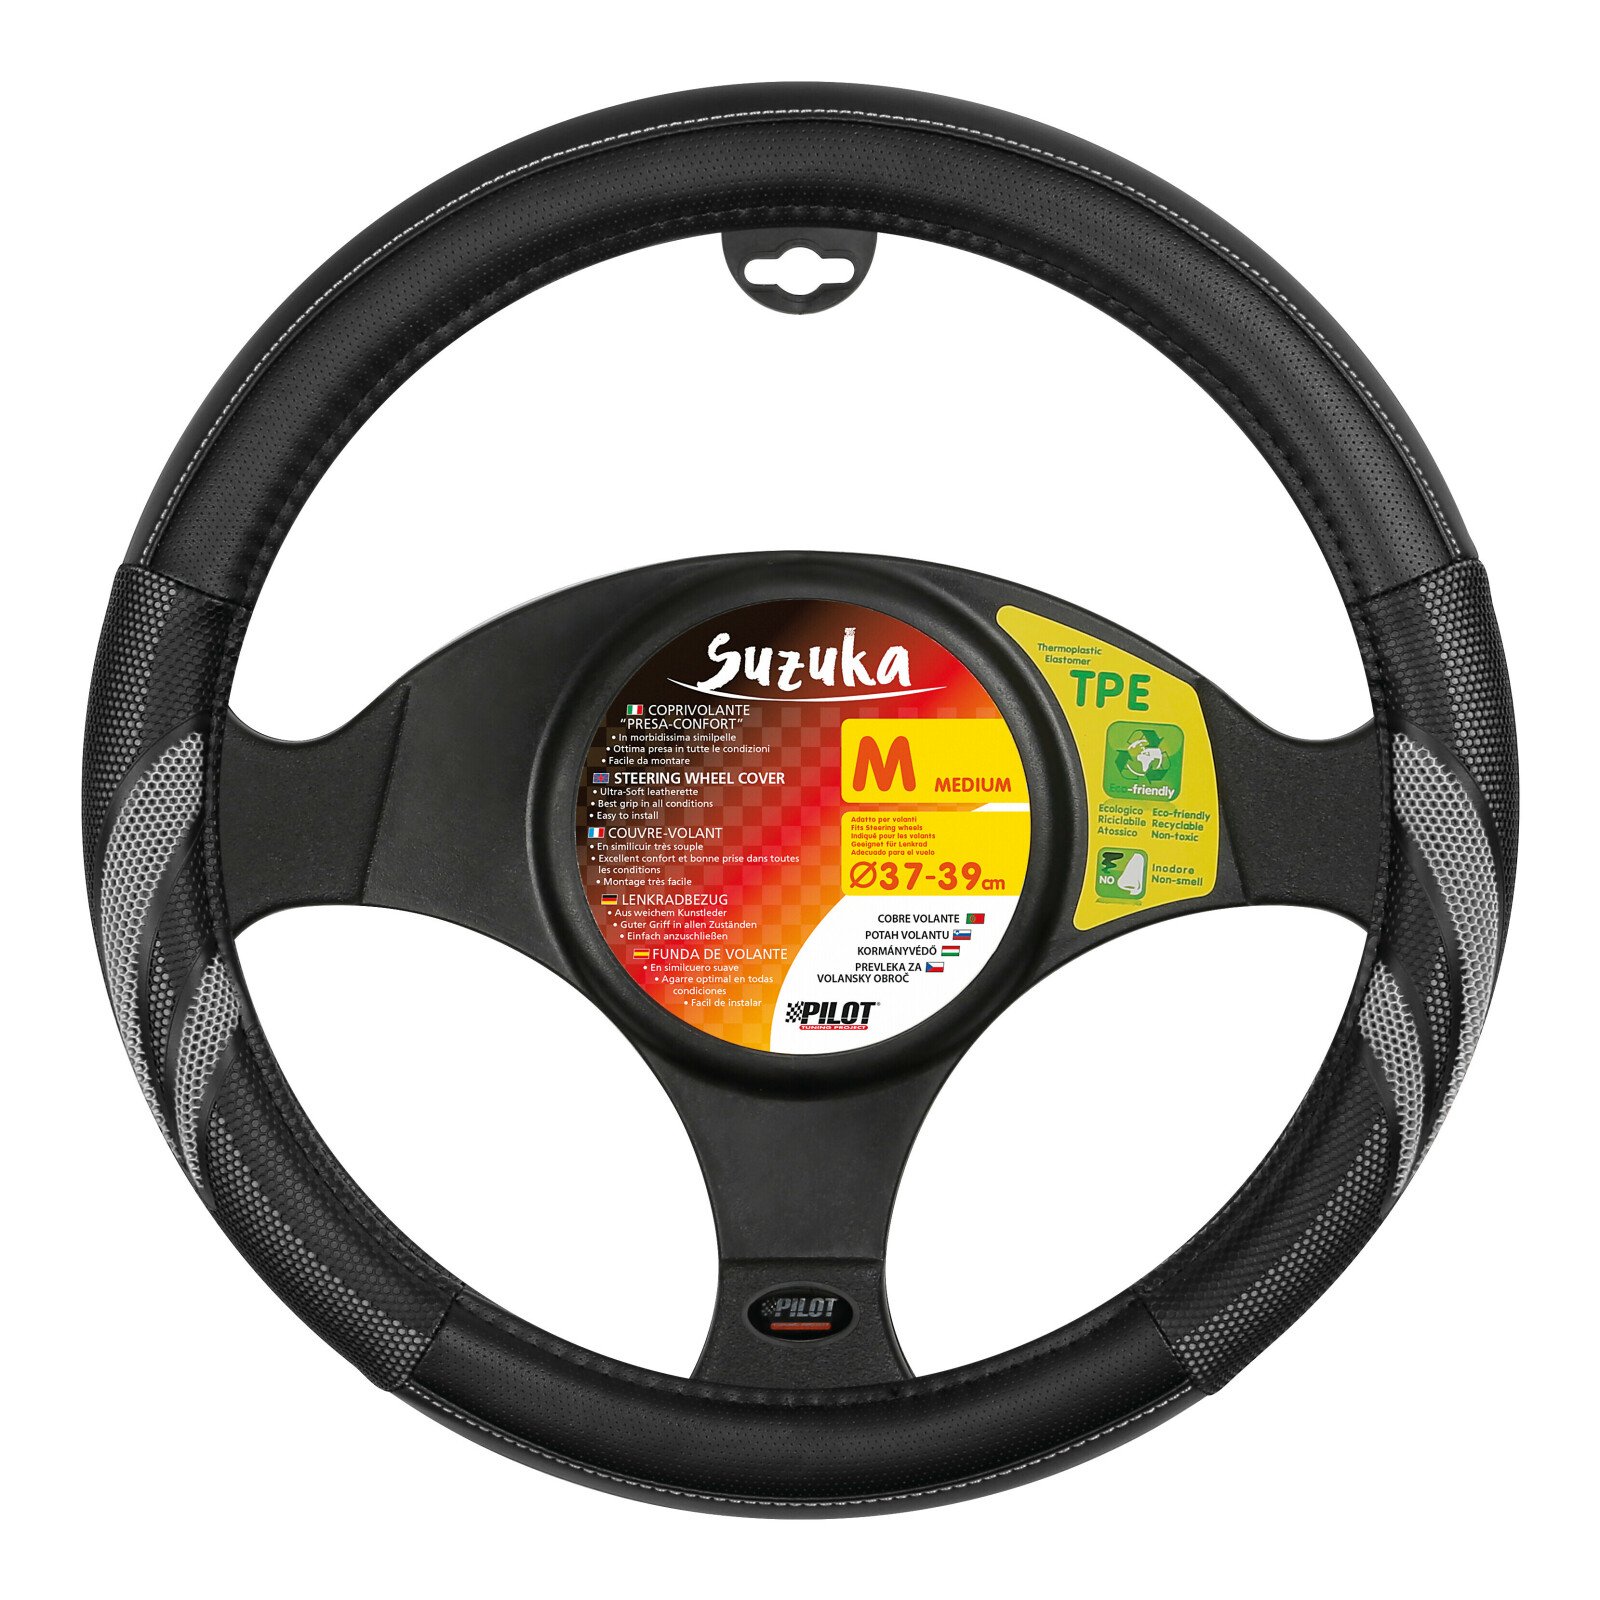 Suzuka leatherette steering wheel cover - M - Ø 37/39 cm - Black/Grey thumb